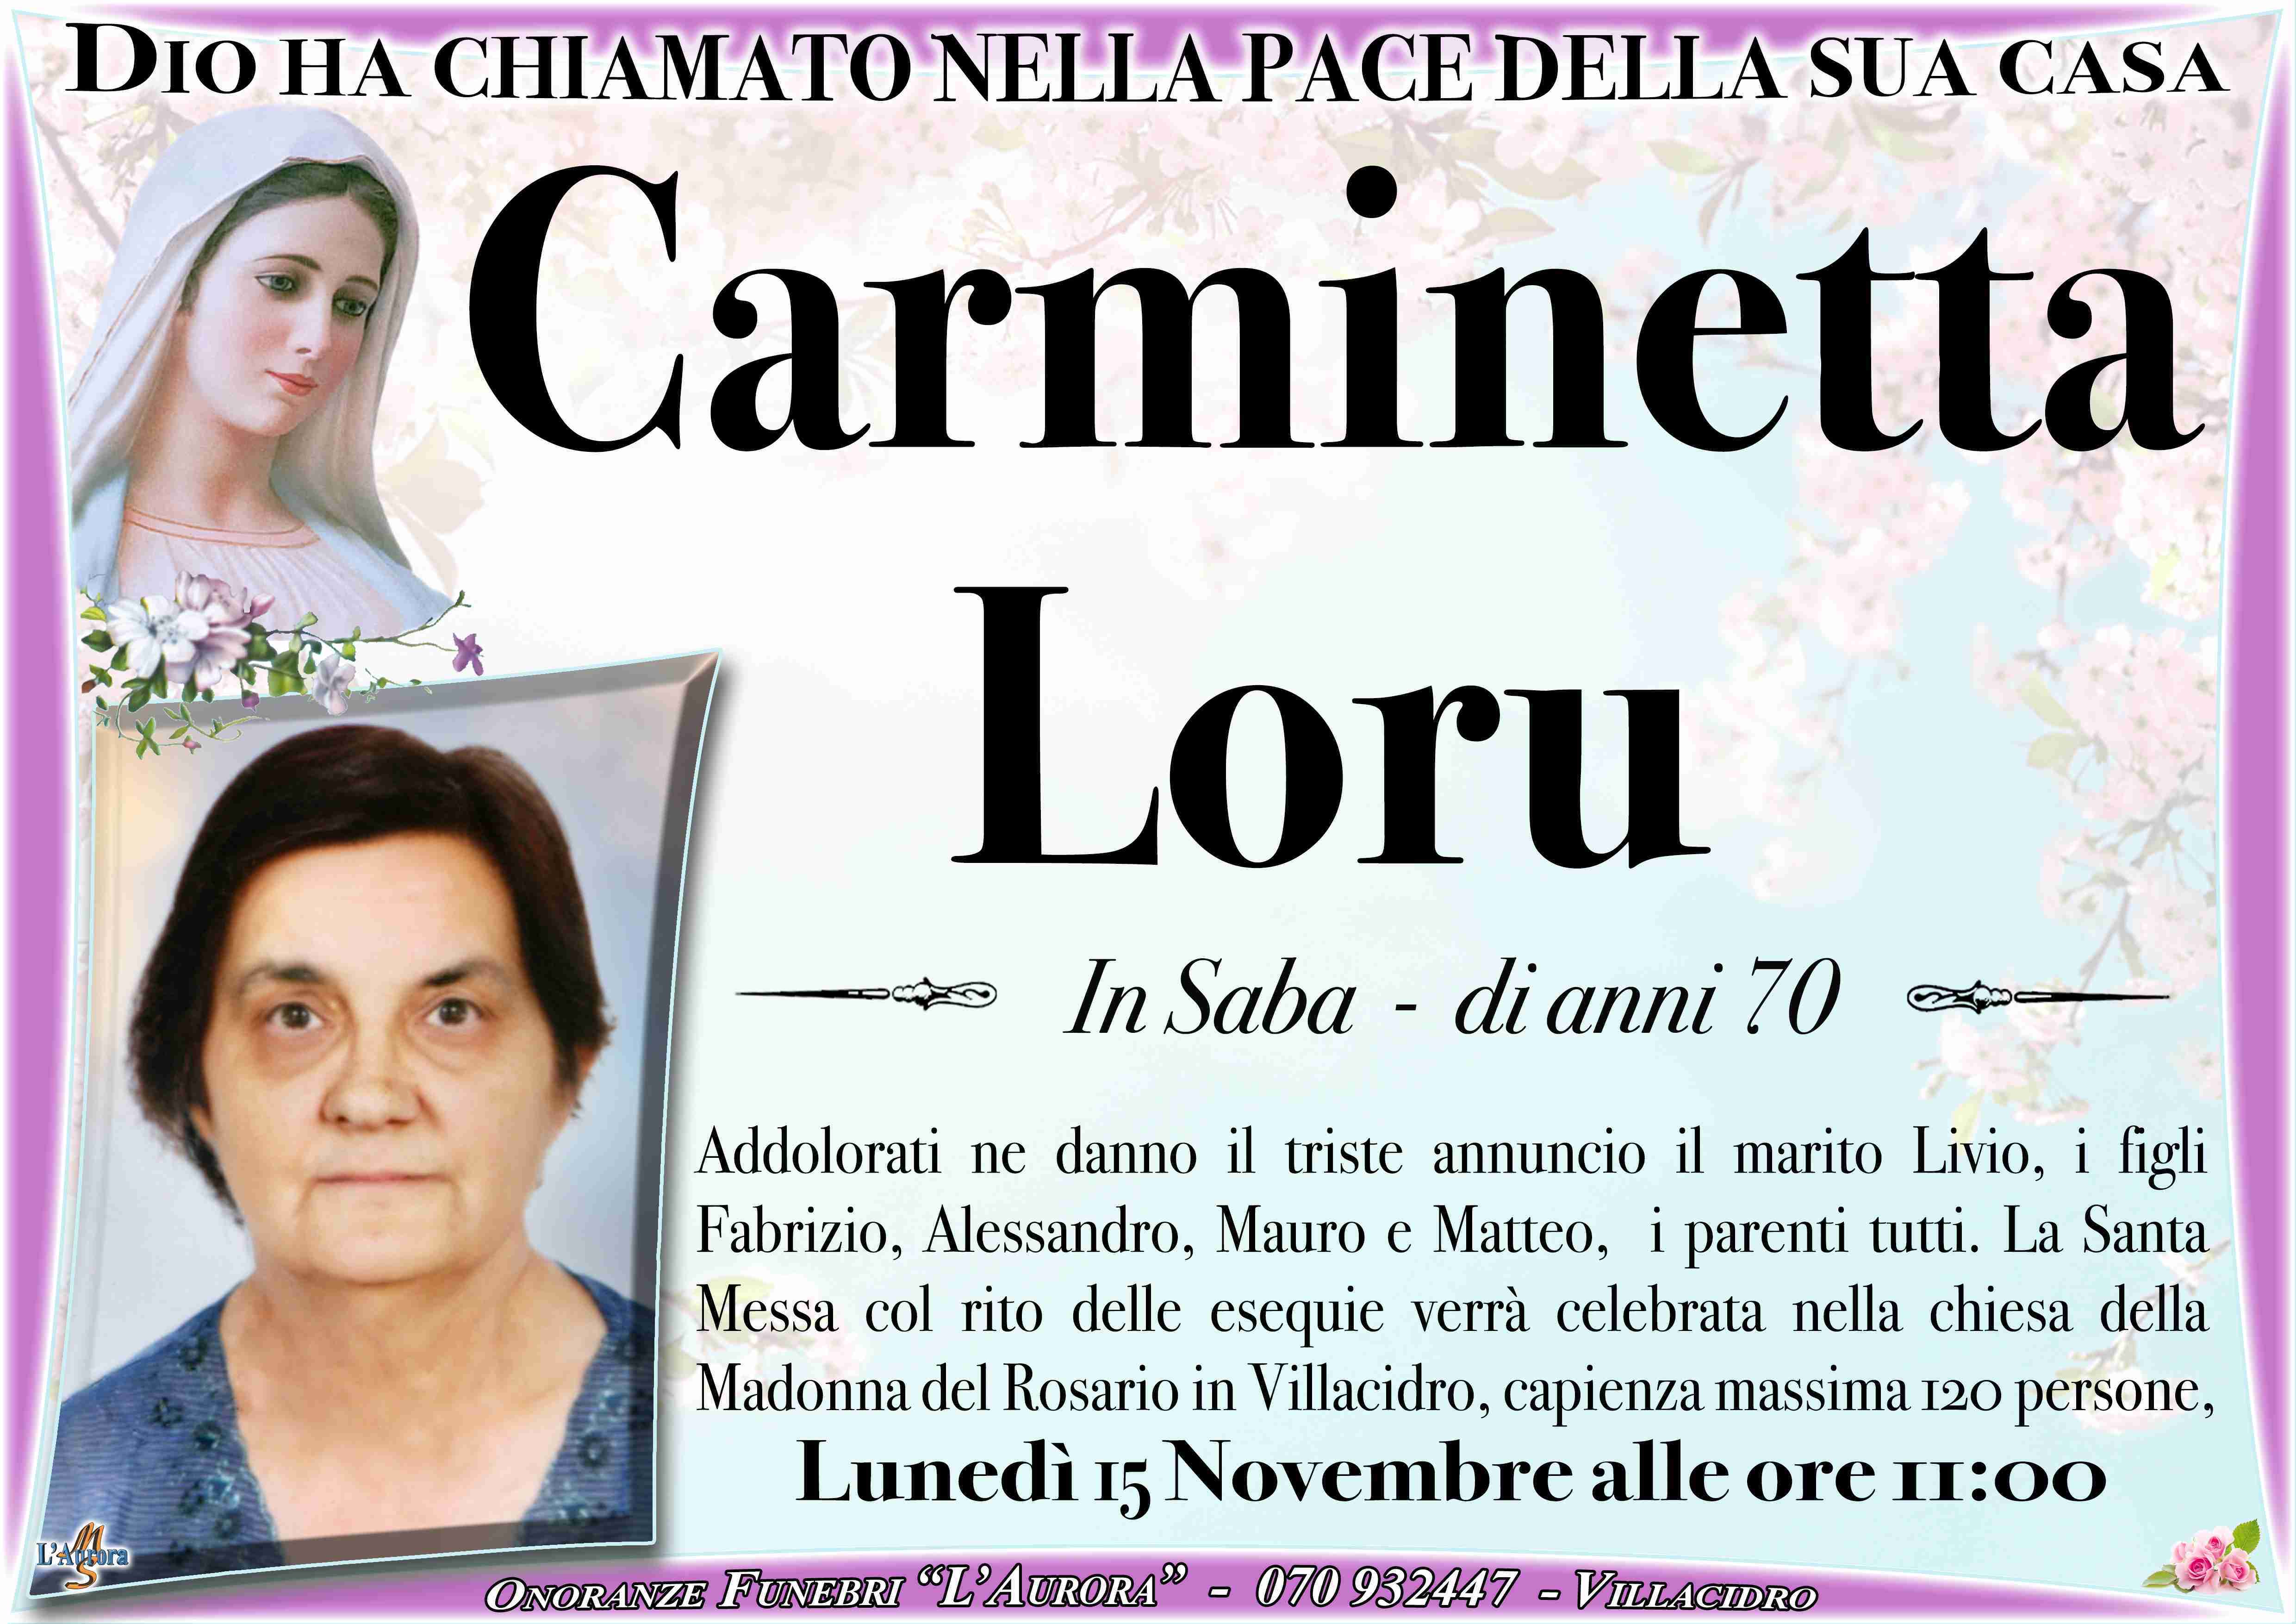 Carminetta Loru